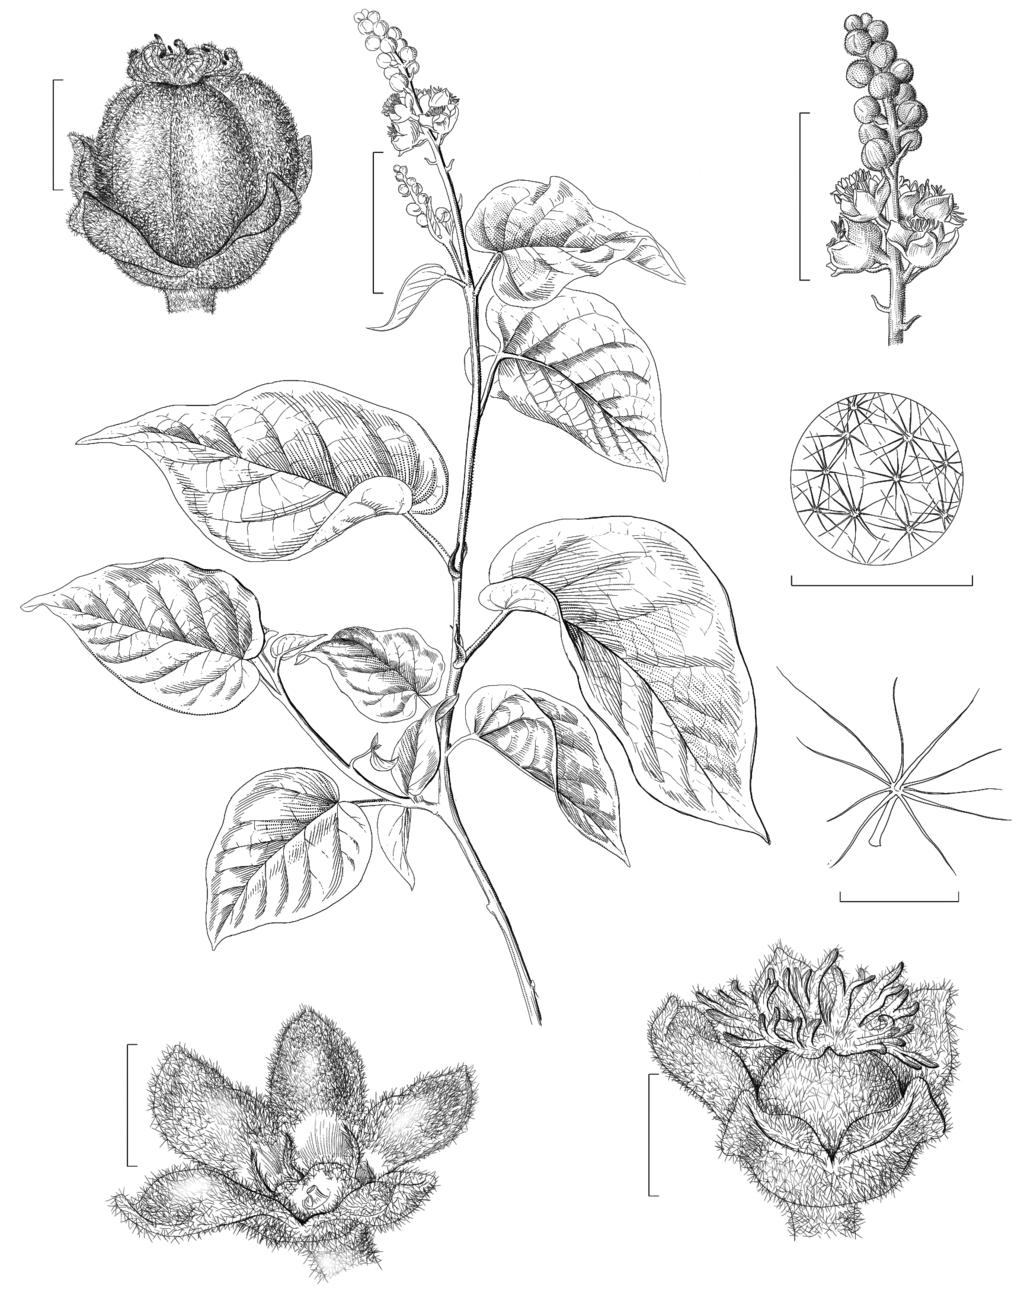 Euphorbiaceae na SGLA, Bahia 507 3 cm 2 cm 5 cm g b c 1 mm d 0,5 mm a 3 cm 3 cm f e Figura 3 a-g. Croton jacobinensis a. ramo fértil; b. inflorescência; c.